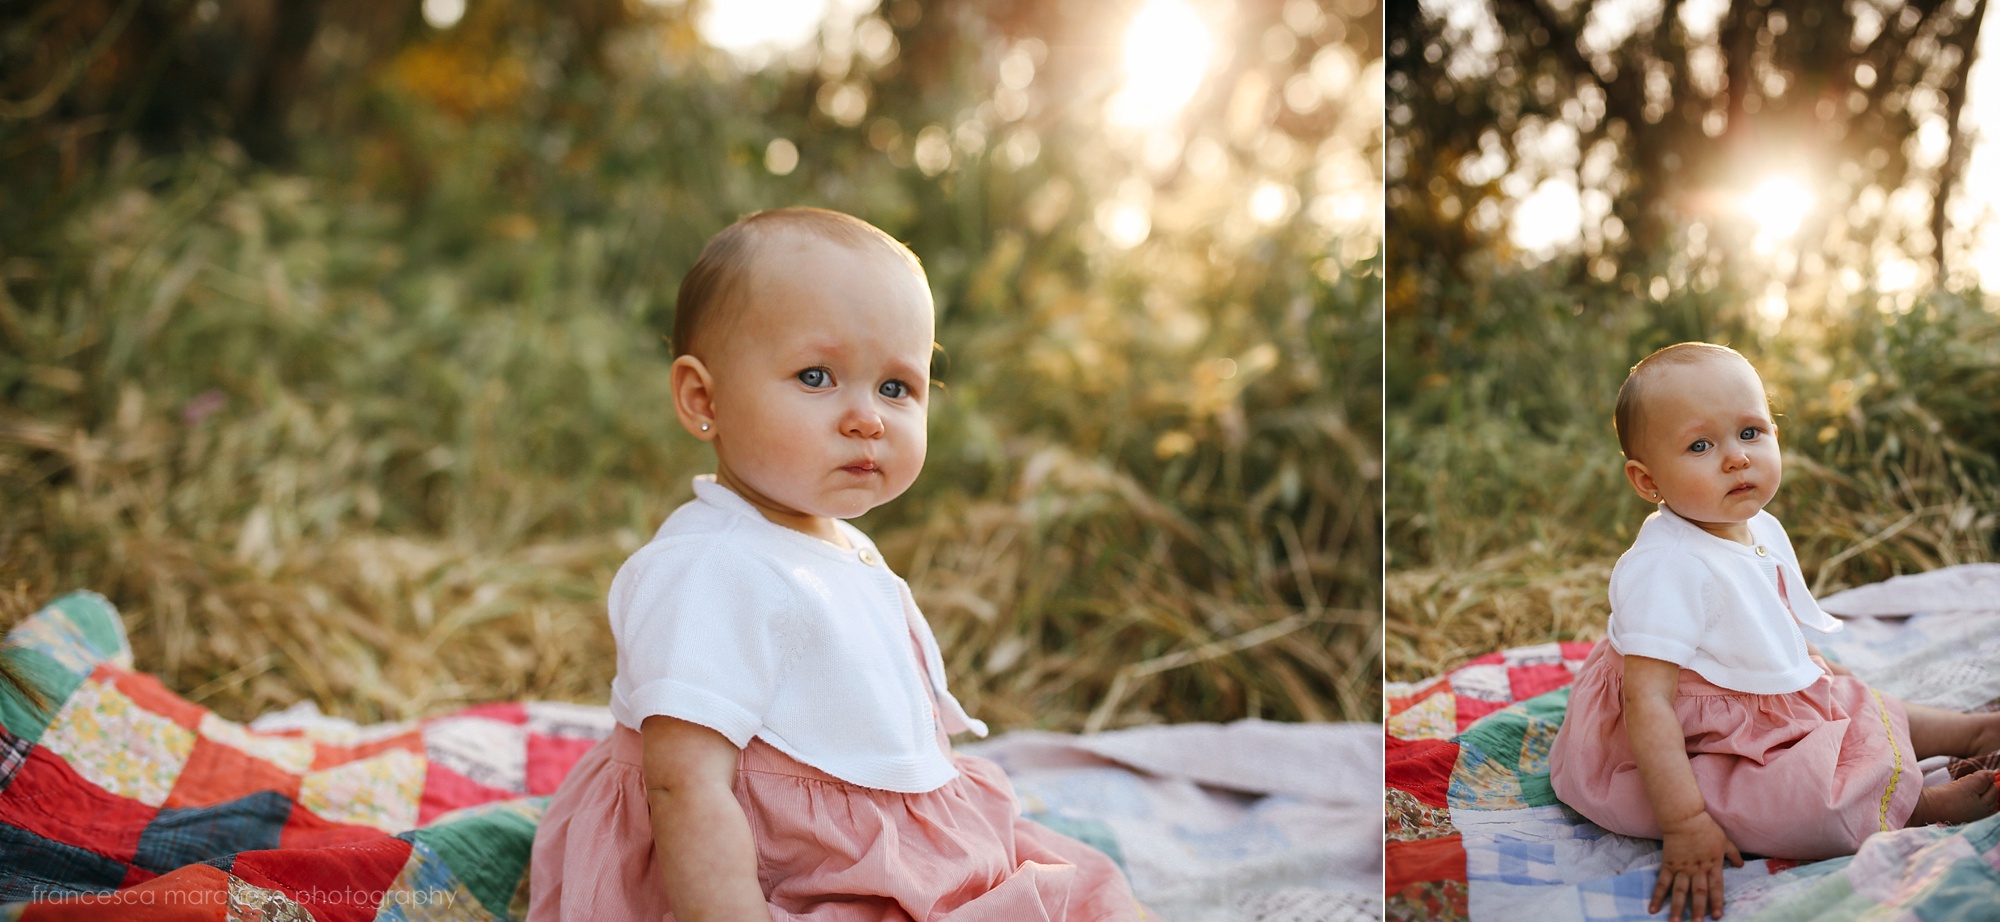 baby girl photo session Orange county child photographer Francesca Marchese Photography